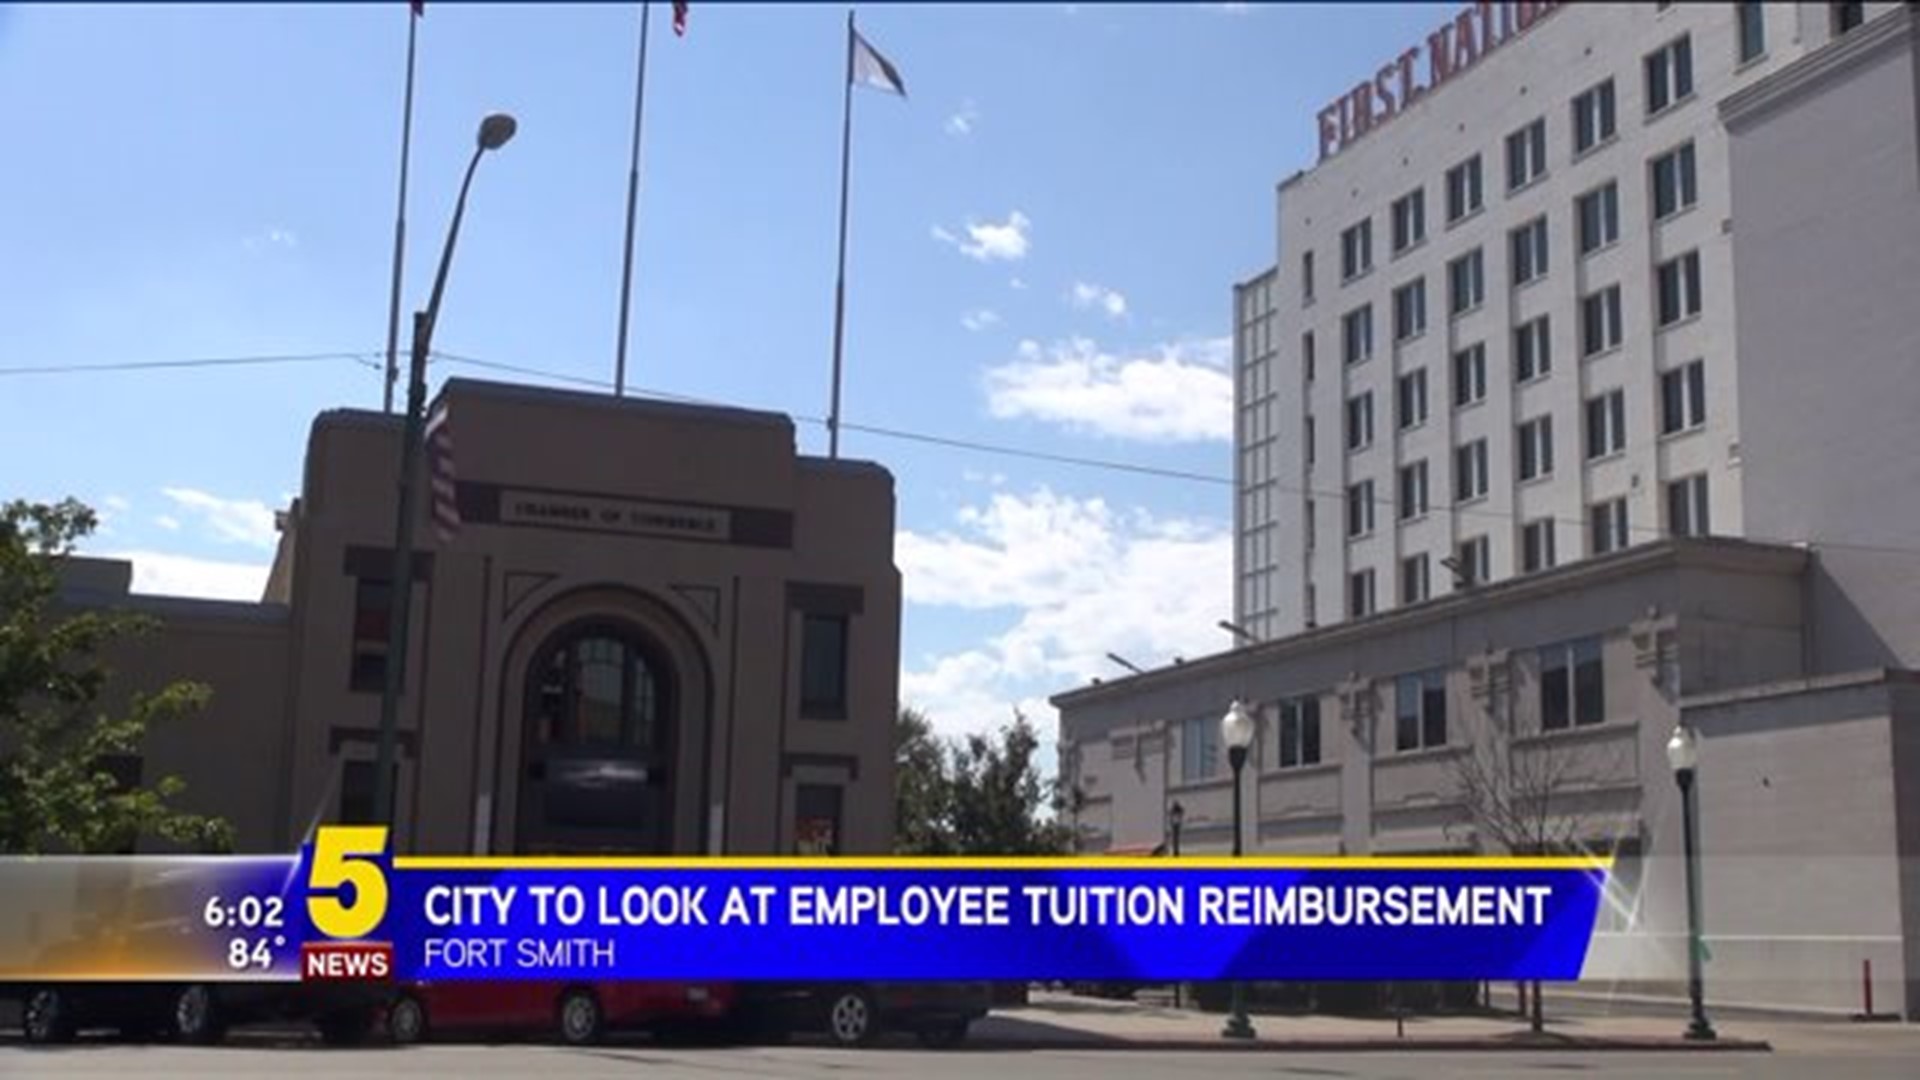 Fort Smith To Look At Employee Reimbursement